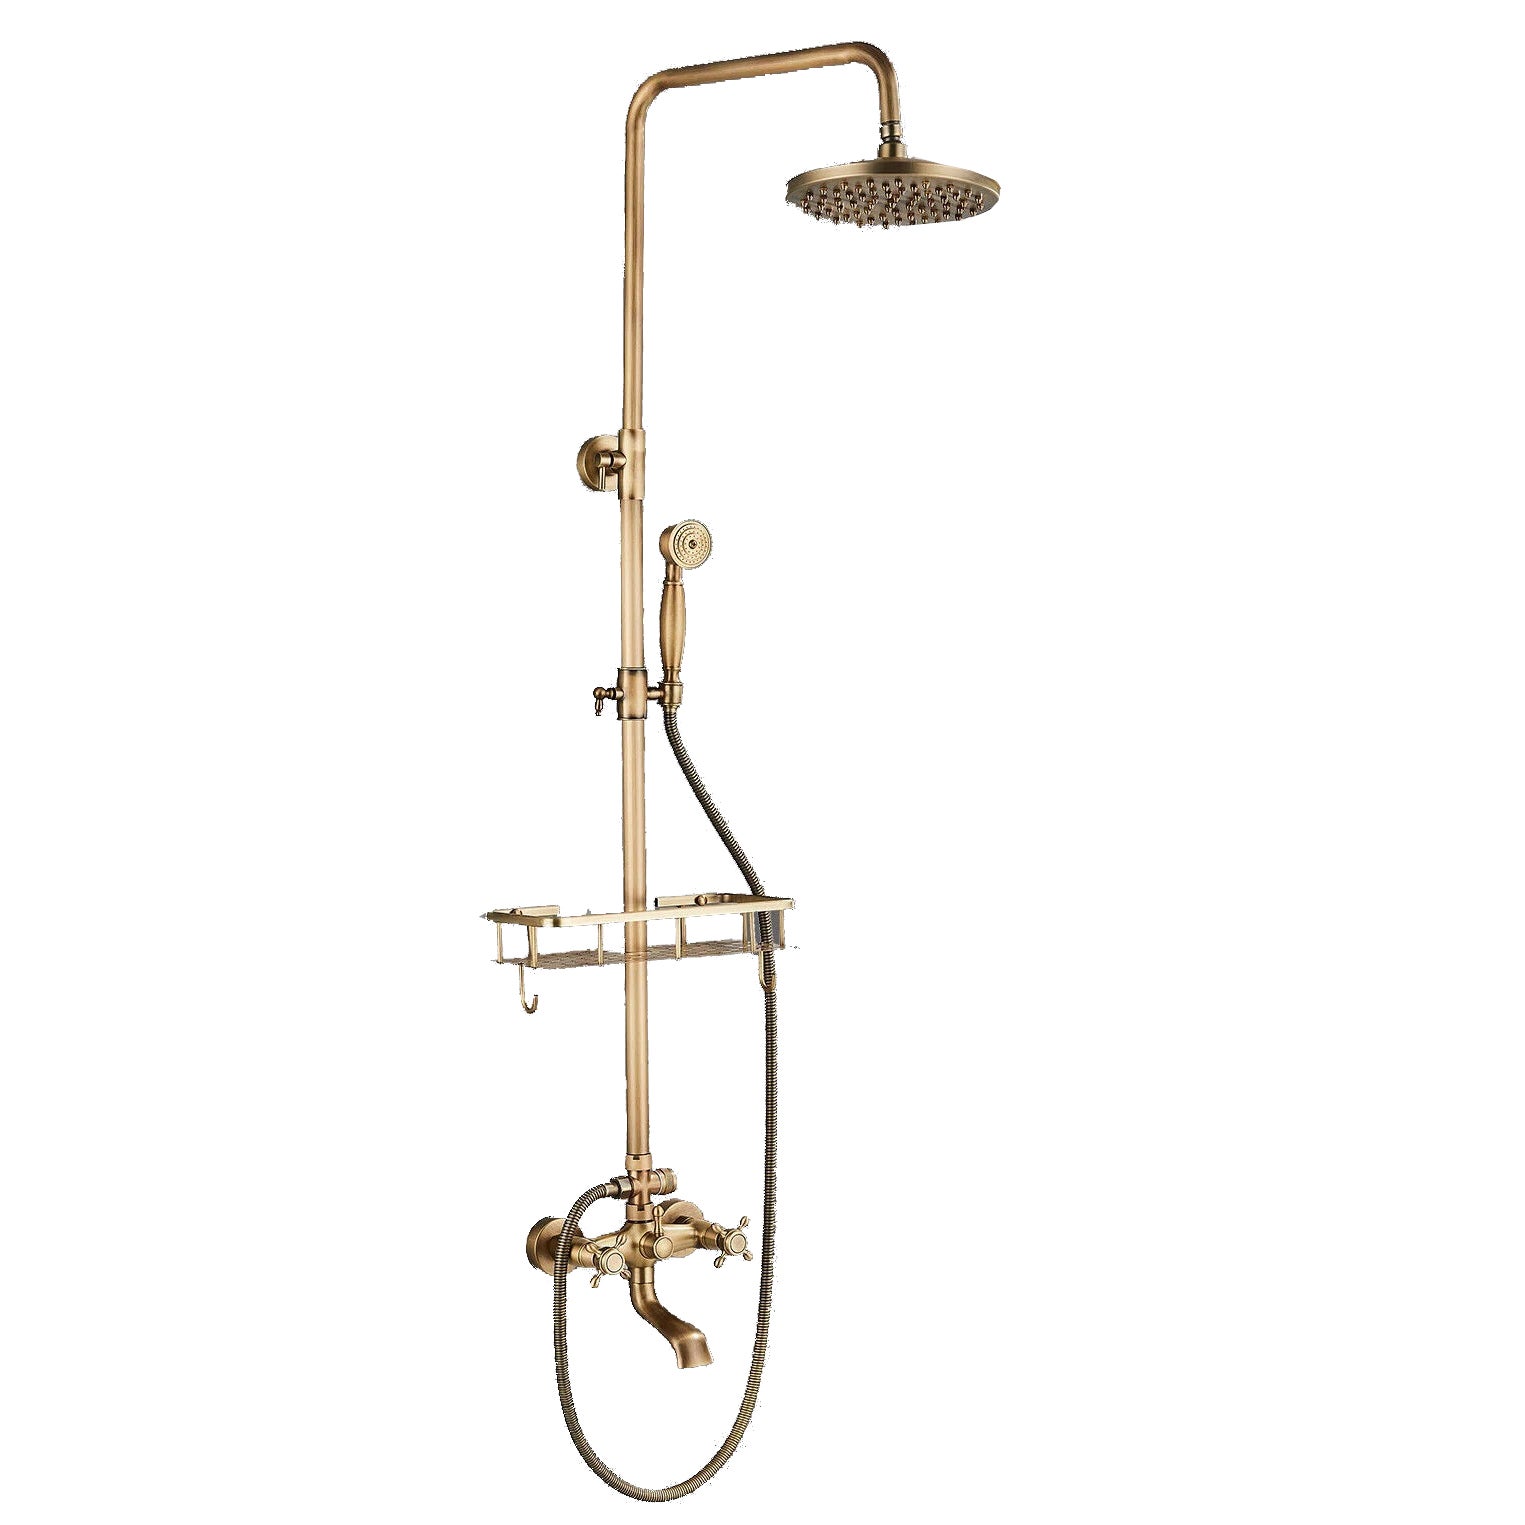 We found Jennifer Aniston's exact brass shower fixture, plus a $180 Amazon alternative